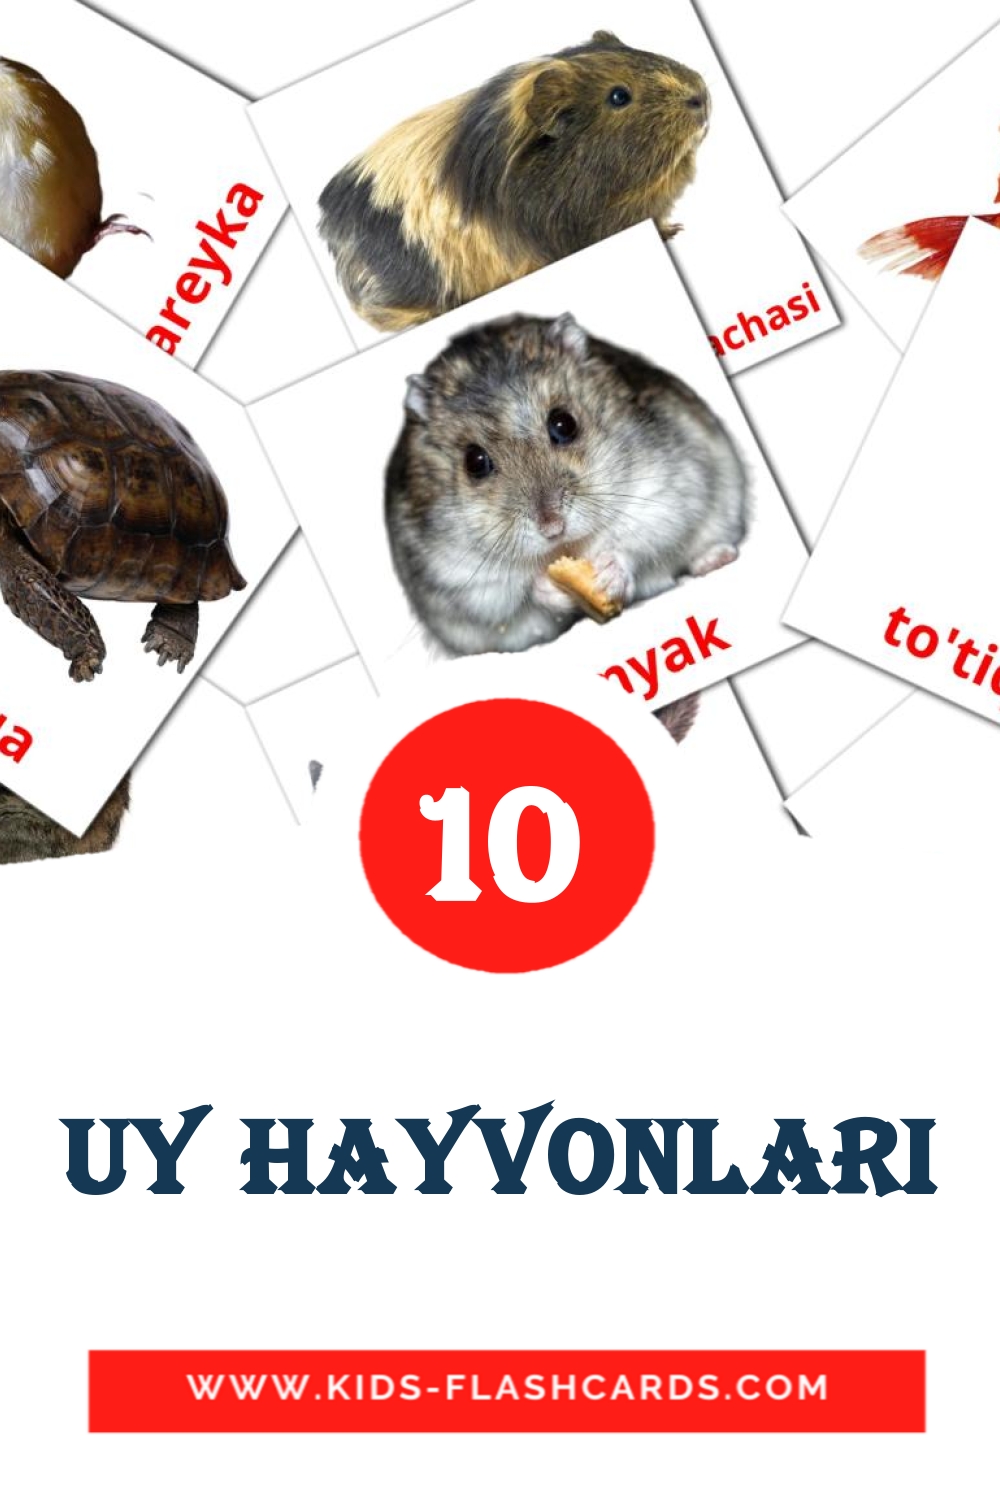 Uy hayvonlari на узбекском для Детского Сада (10 карточек)